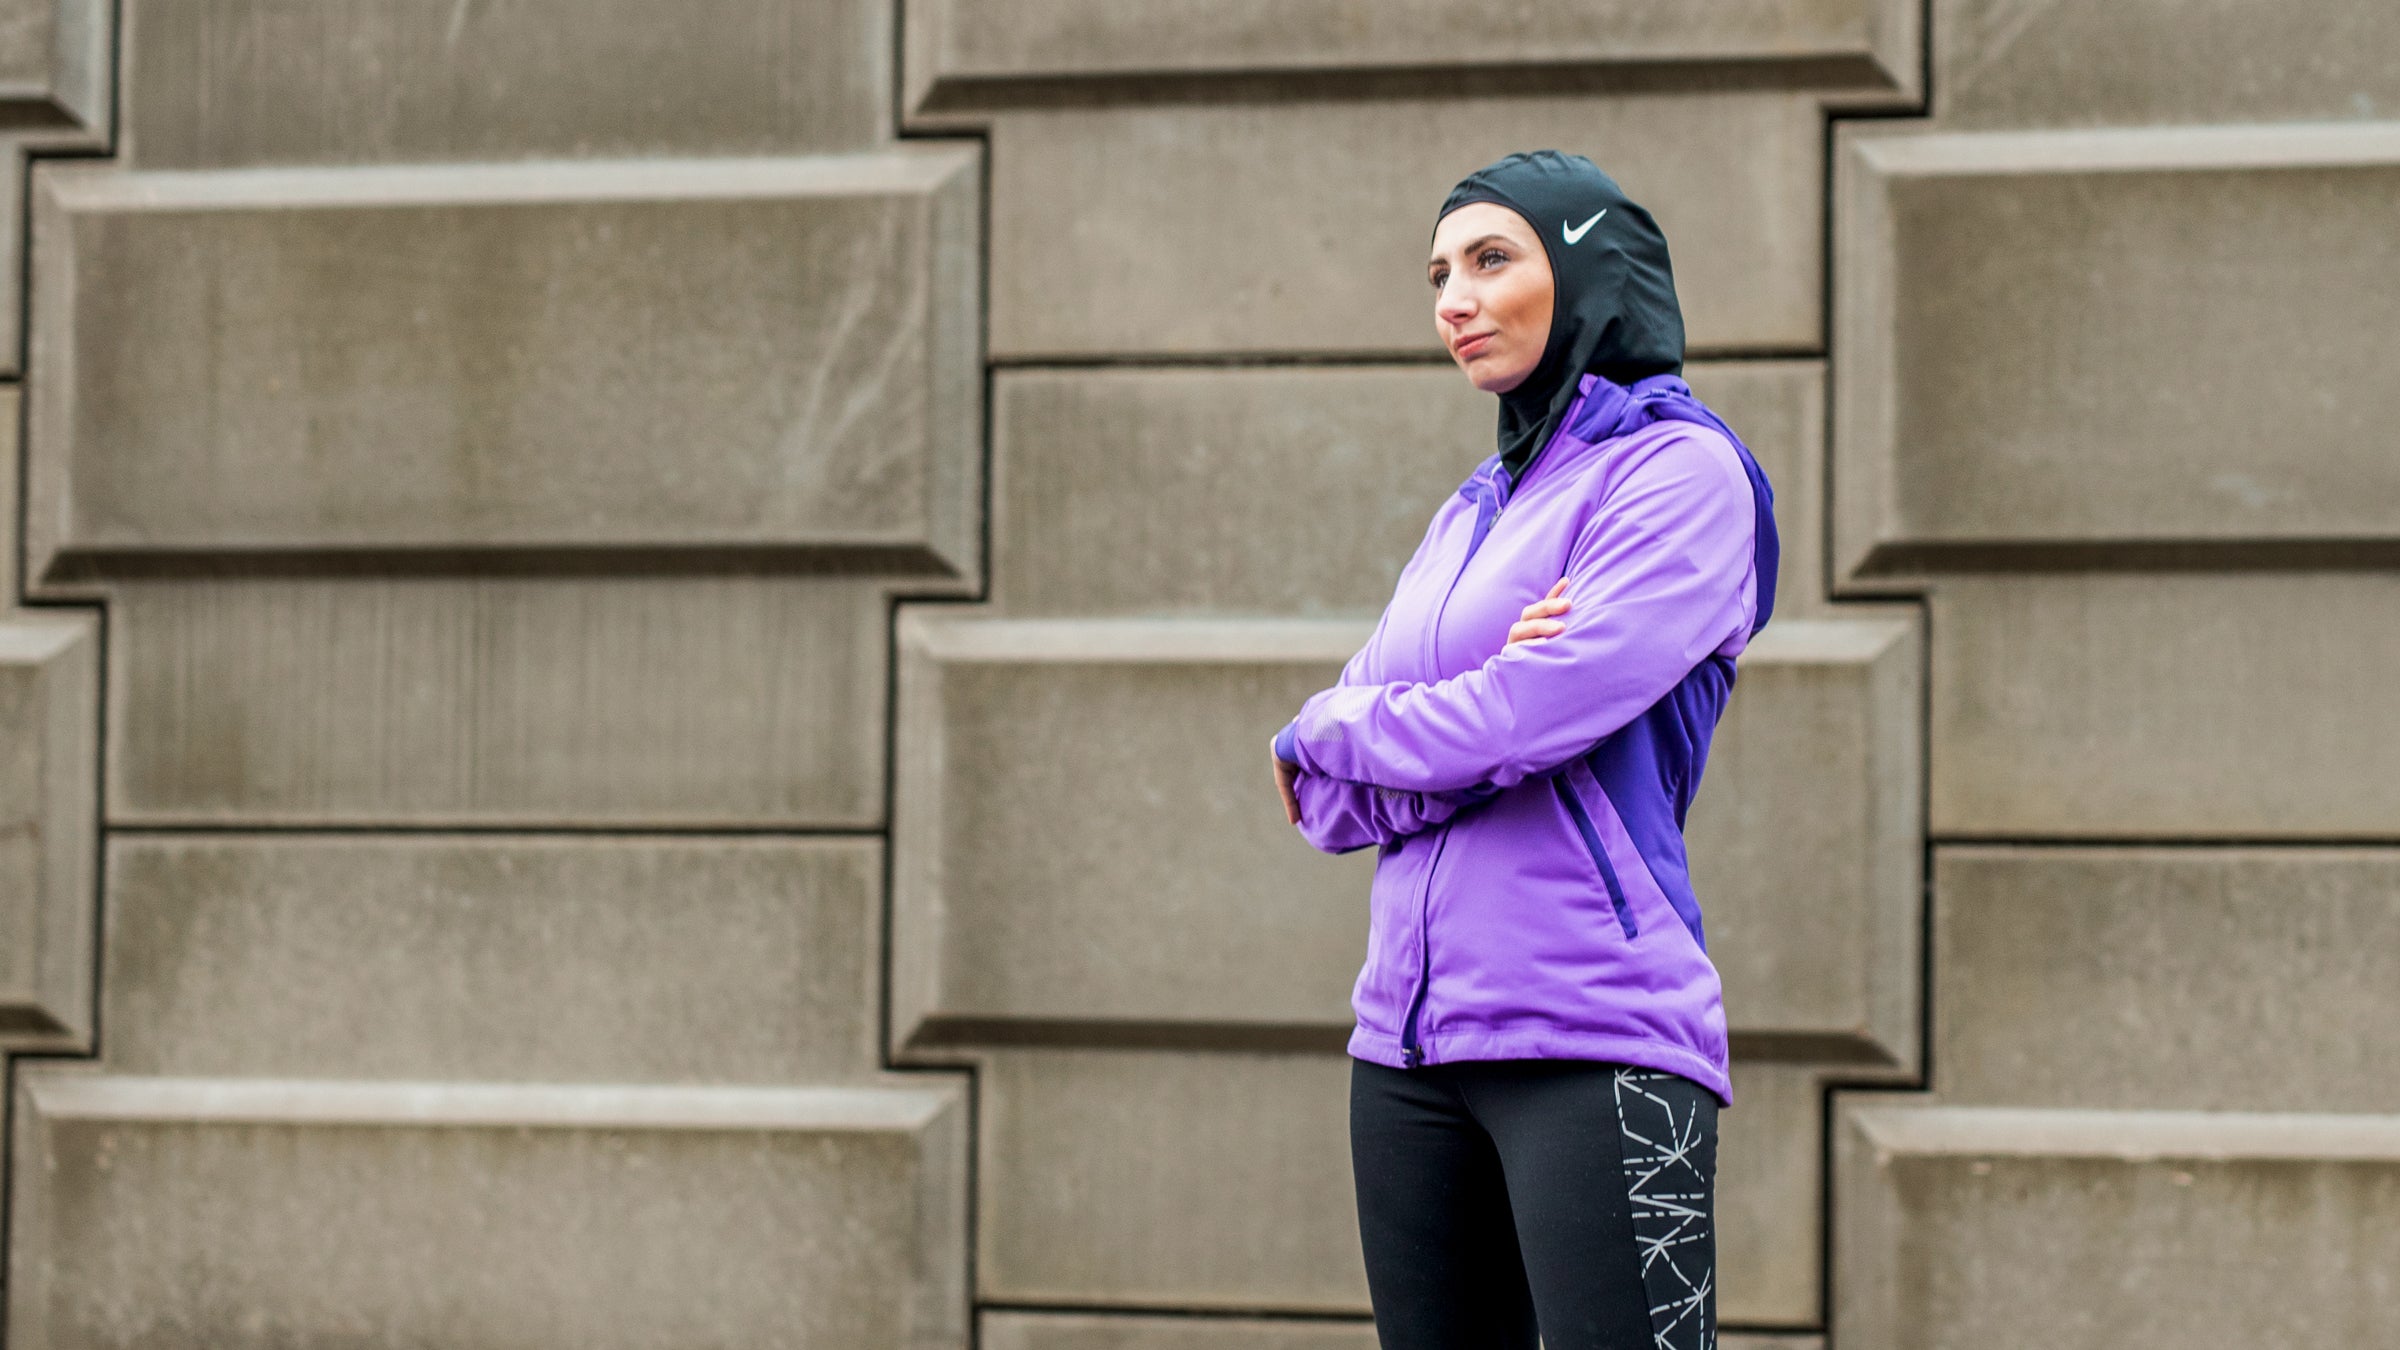 Distinción Lógicamente mareado Testing the Nike Pro Hijab - Outside Online